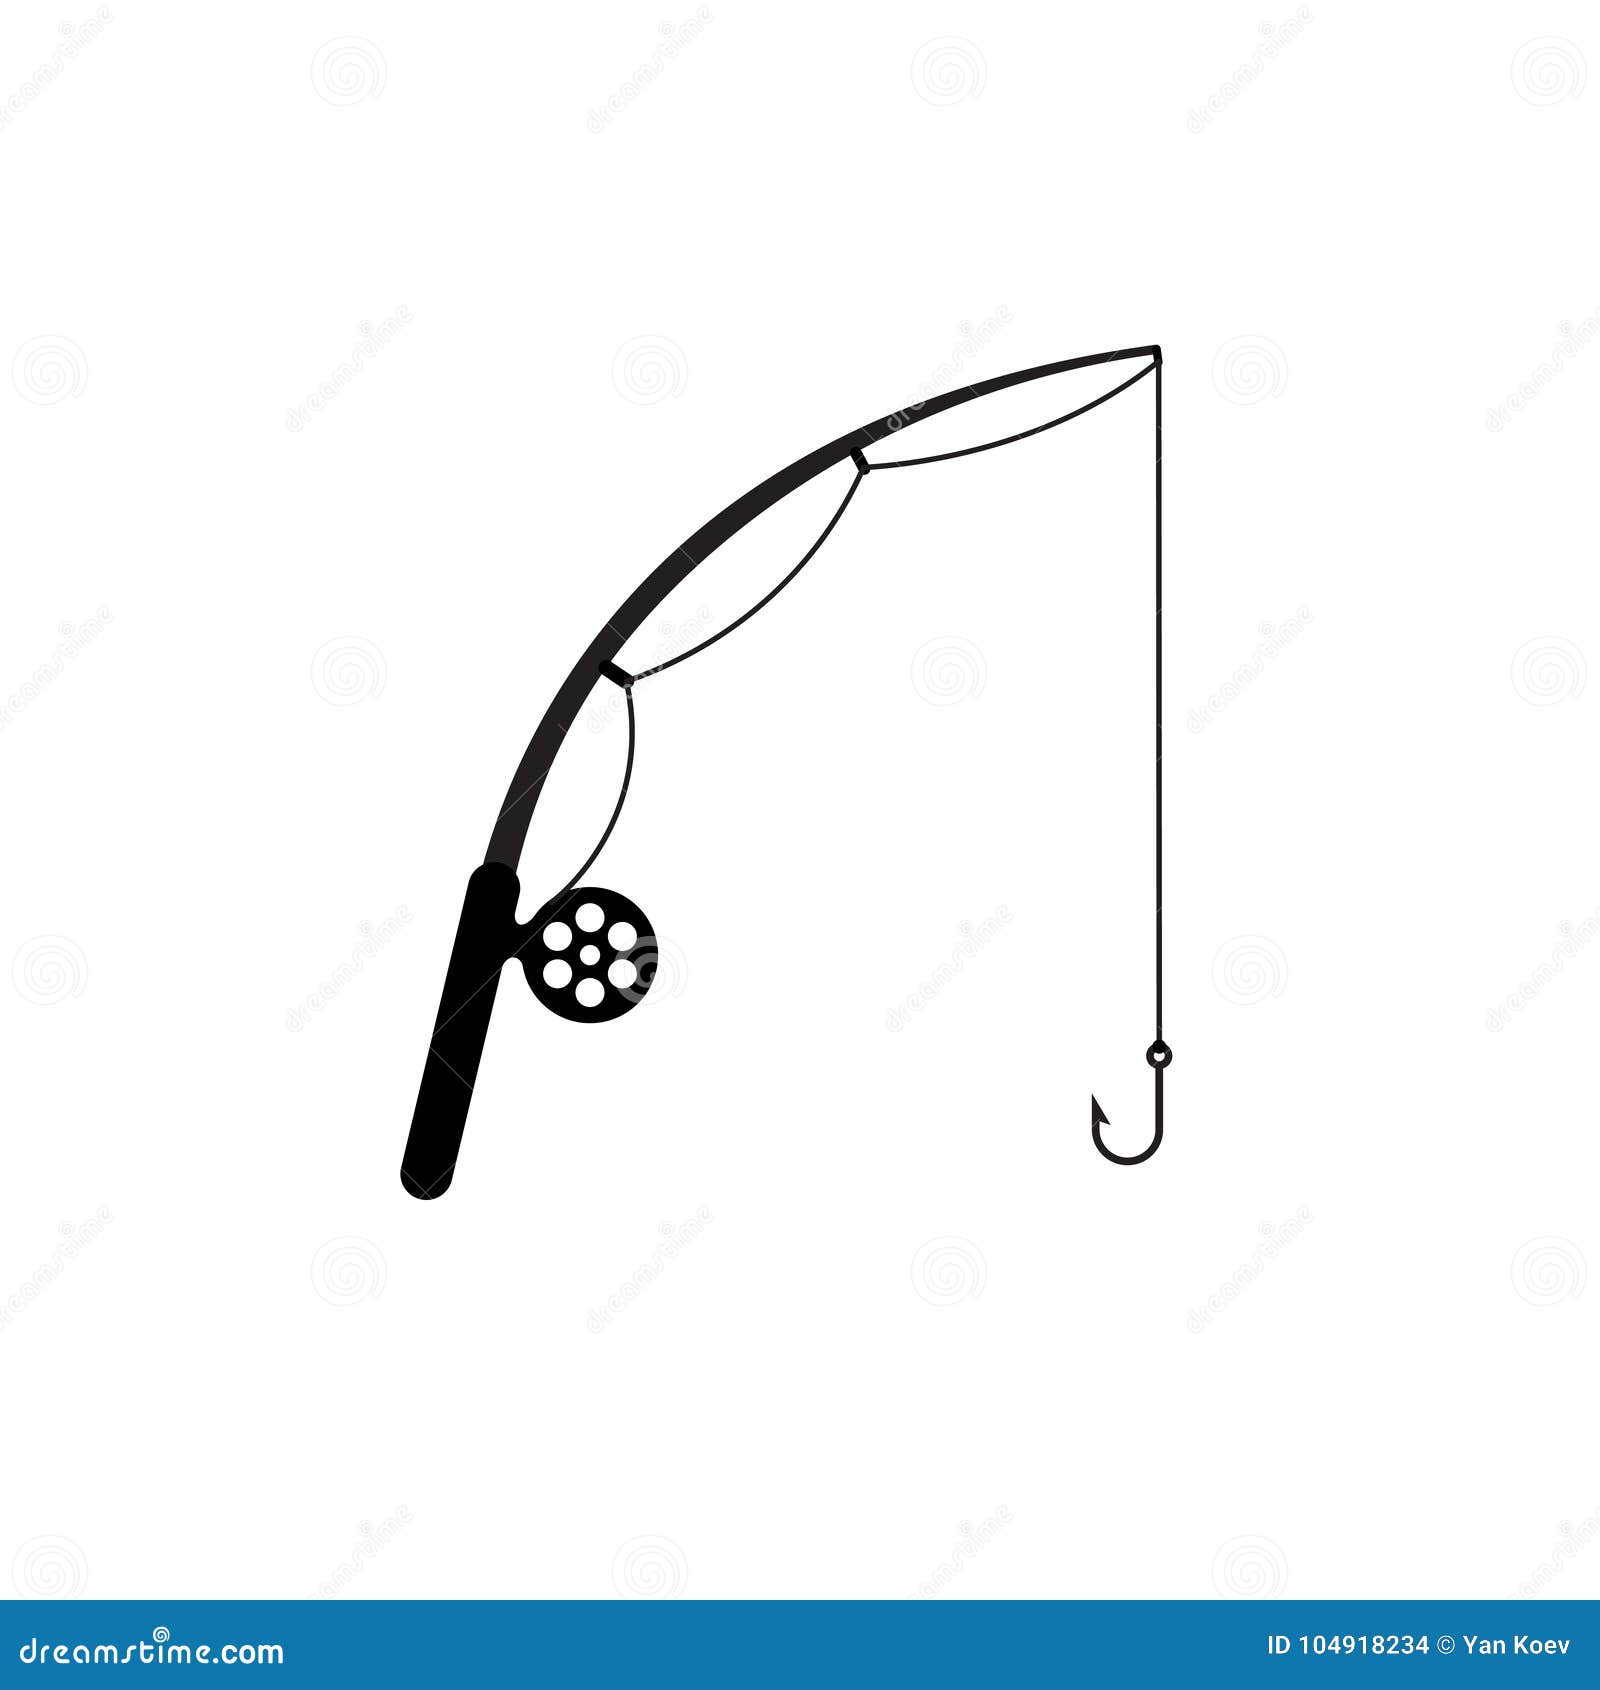 https://thumbs.dreamstime.com/z/fishing-rod-simple-silhouette-icon-fishing-rod-simple-silhouette-icon-fishing-rod-reel-line-hook-black-color-104918234.jpg